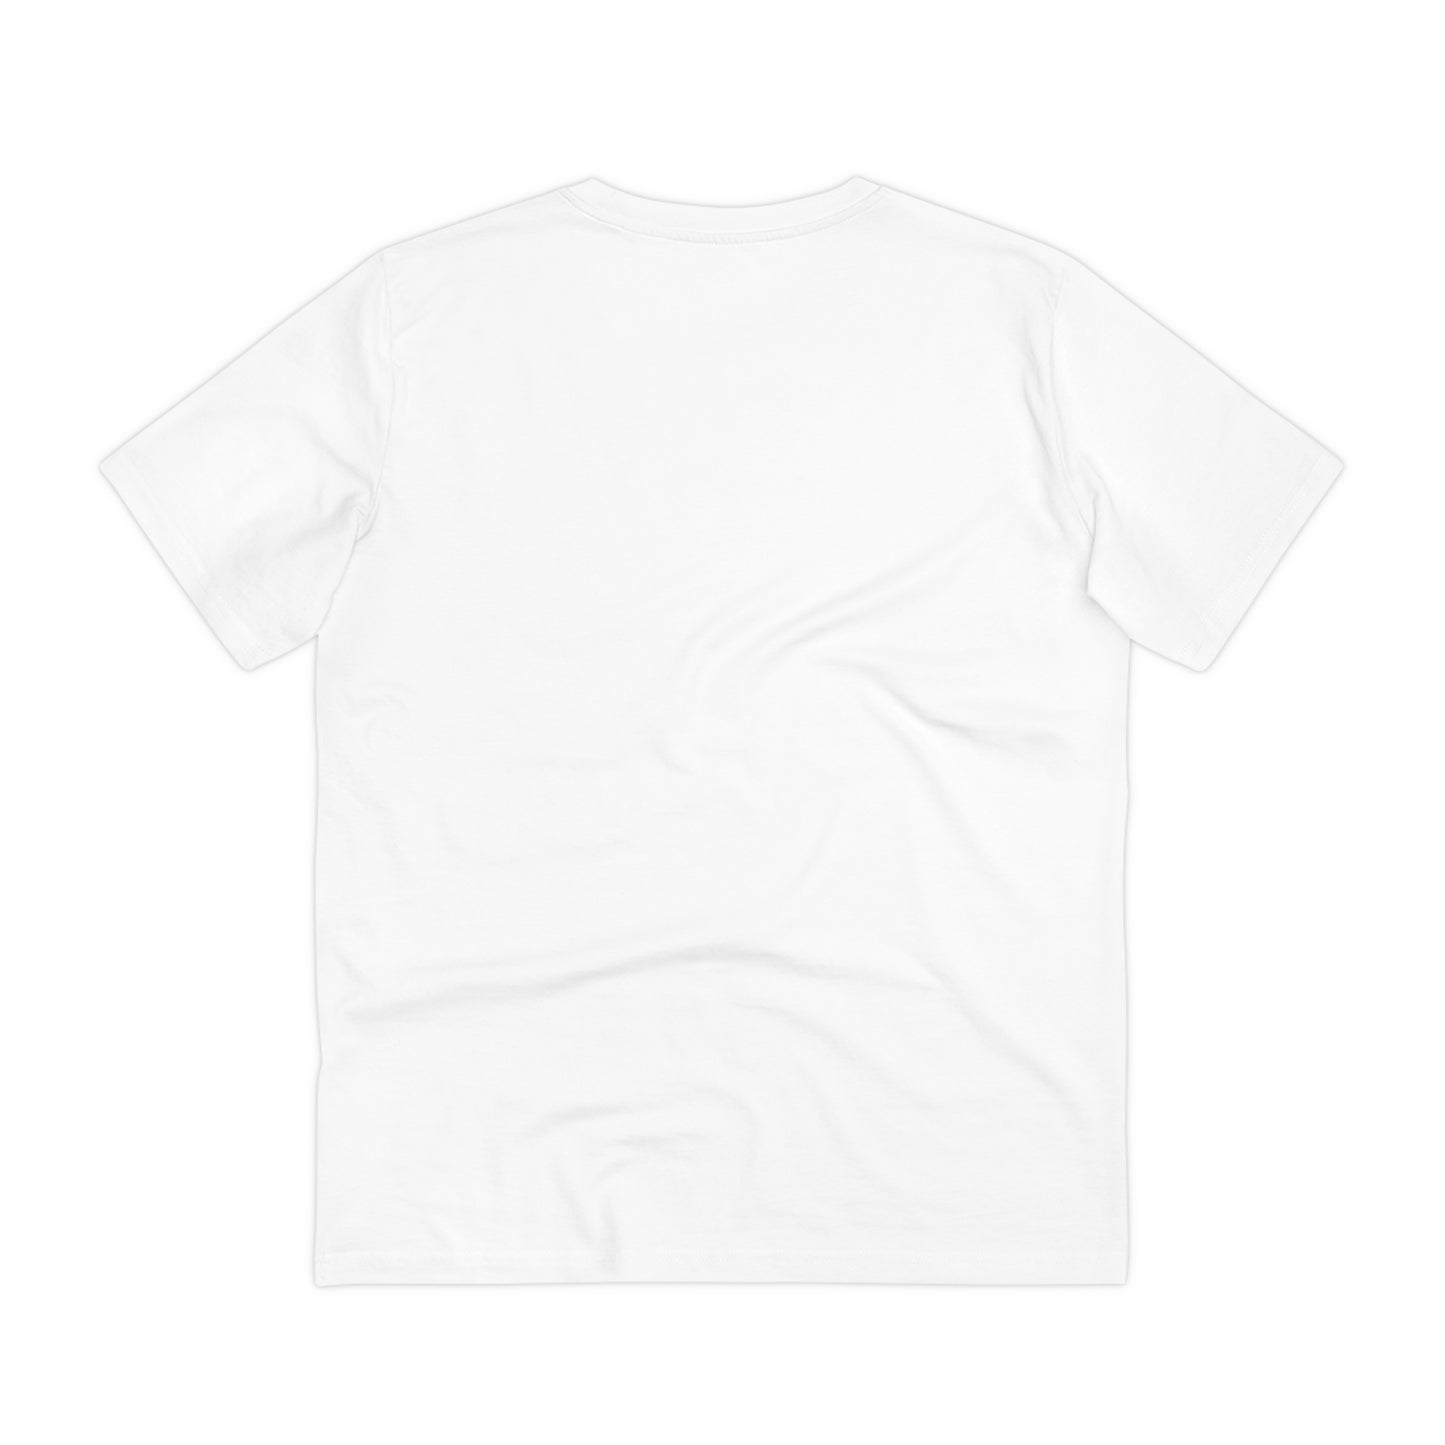 Justabarth T-shirt #5